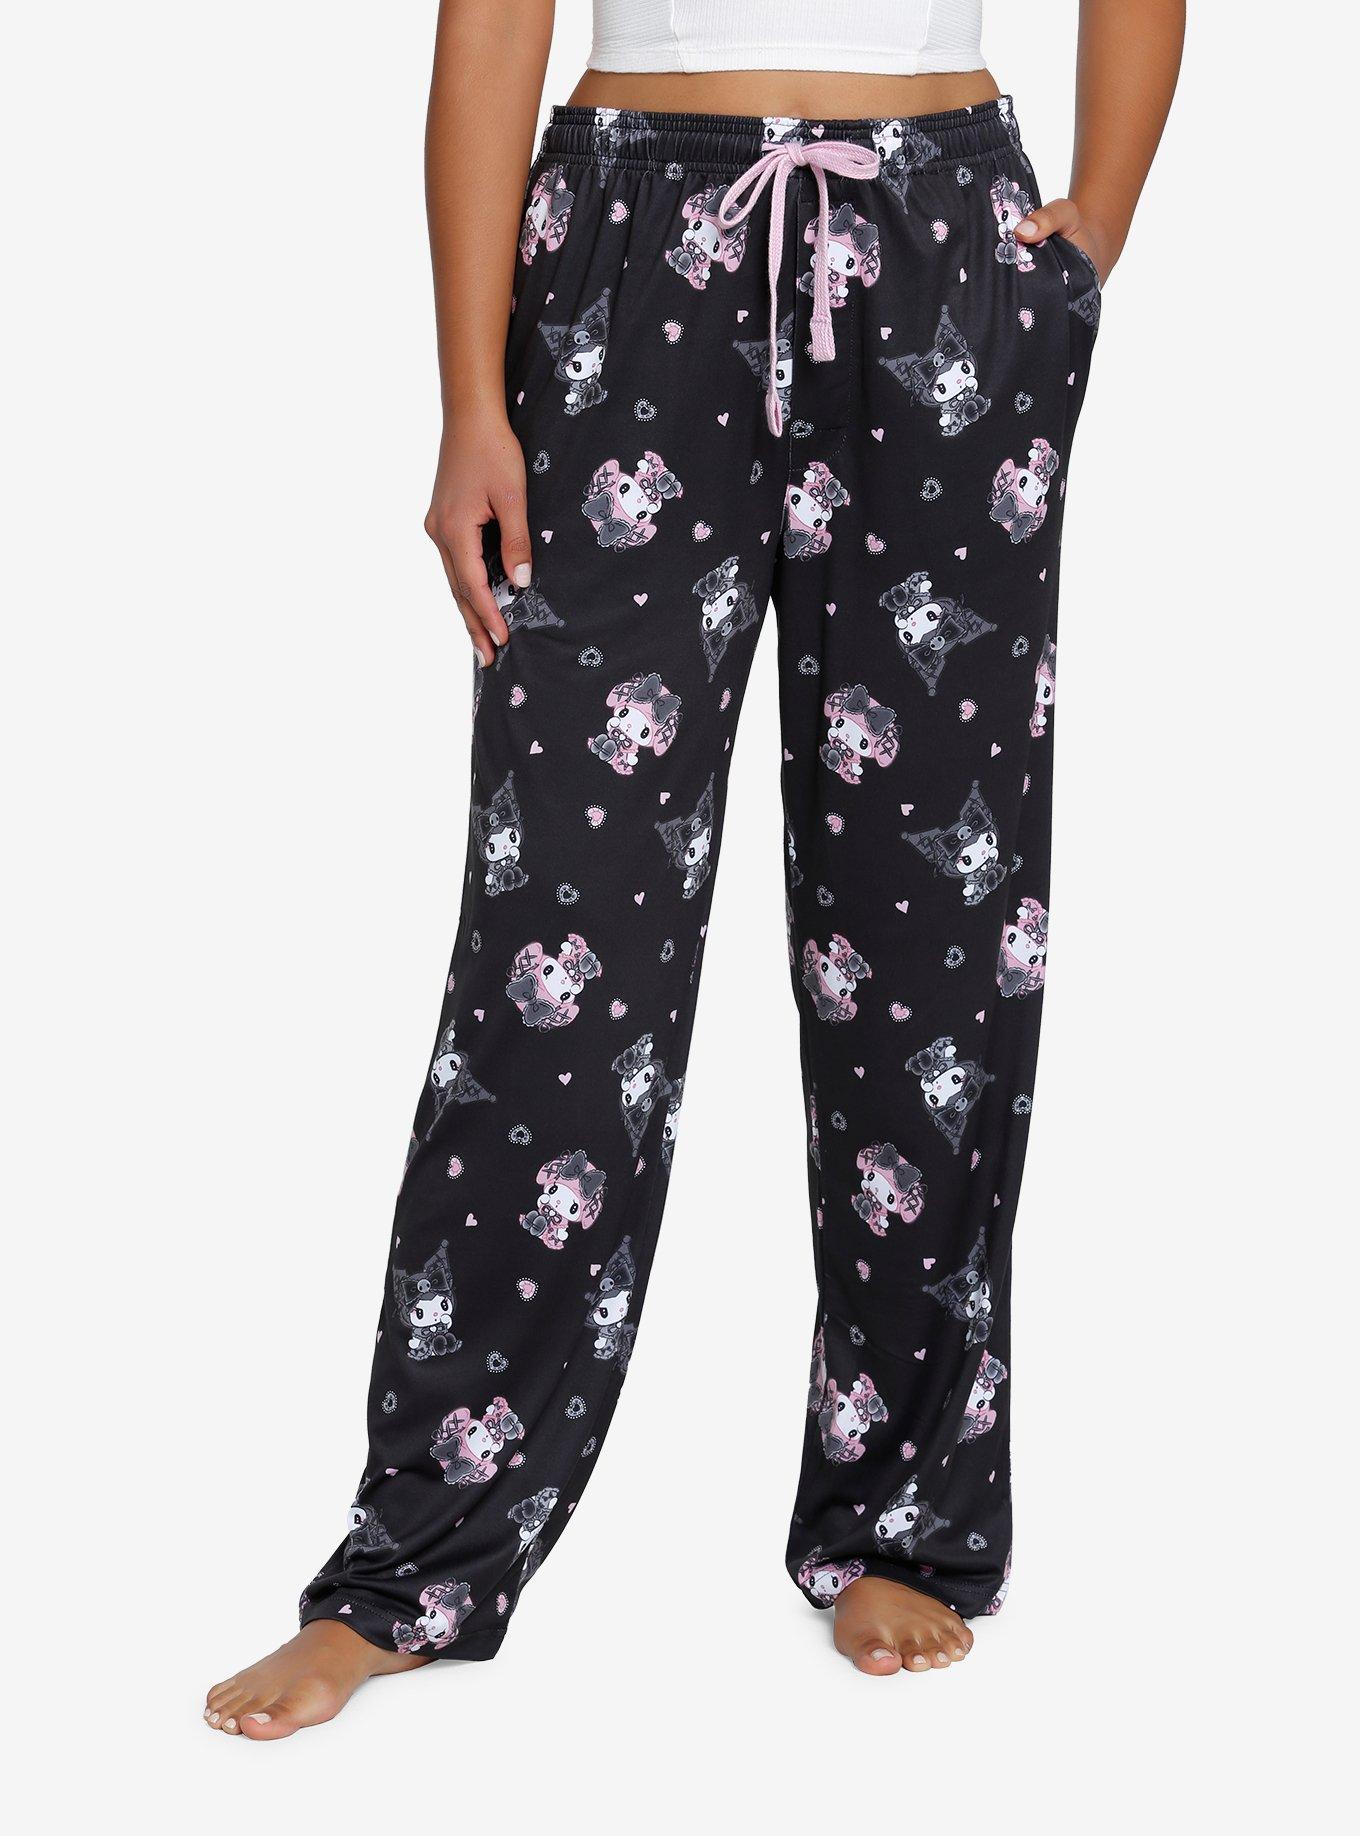 Disney Women's Lilo And Stitch Junk Food Soft Touch Cotton Pajama